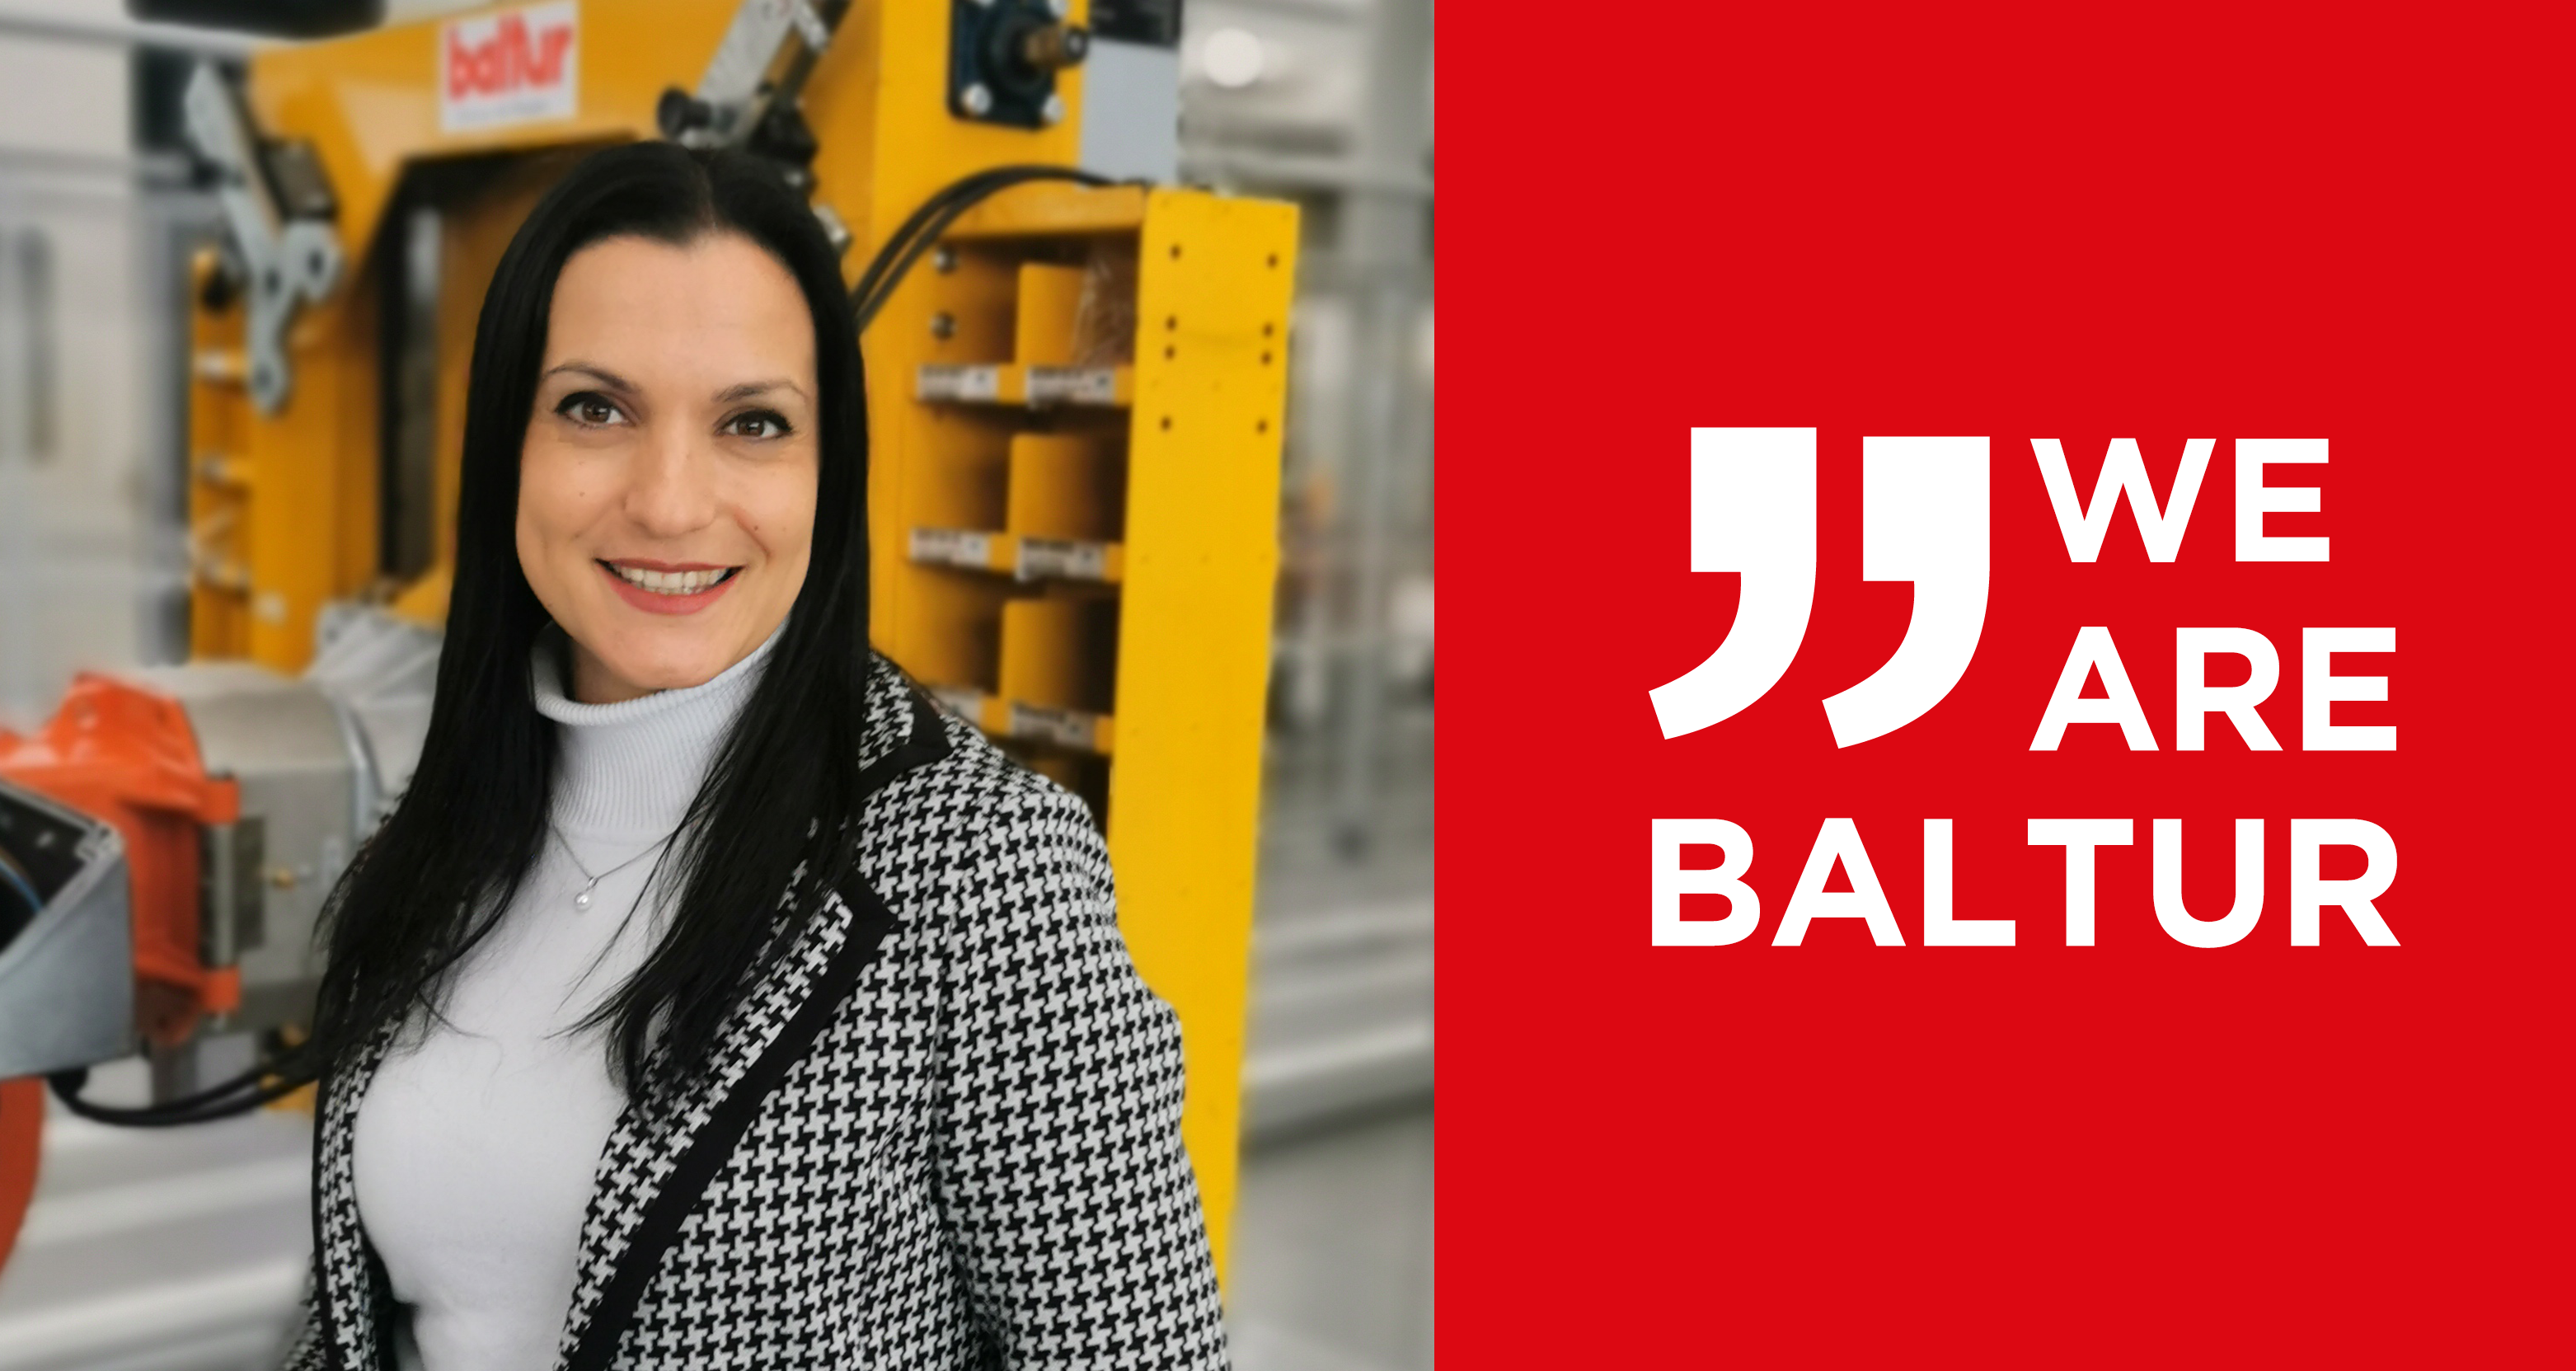 Crescita e carriera in Baltur: intervista al HR Manager Margherita Zaverio 1